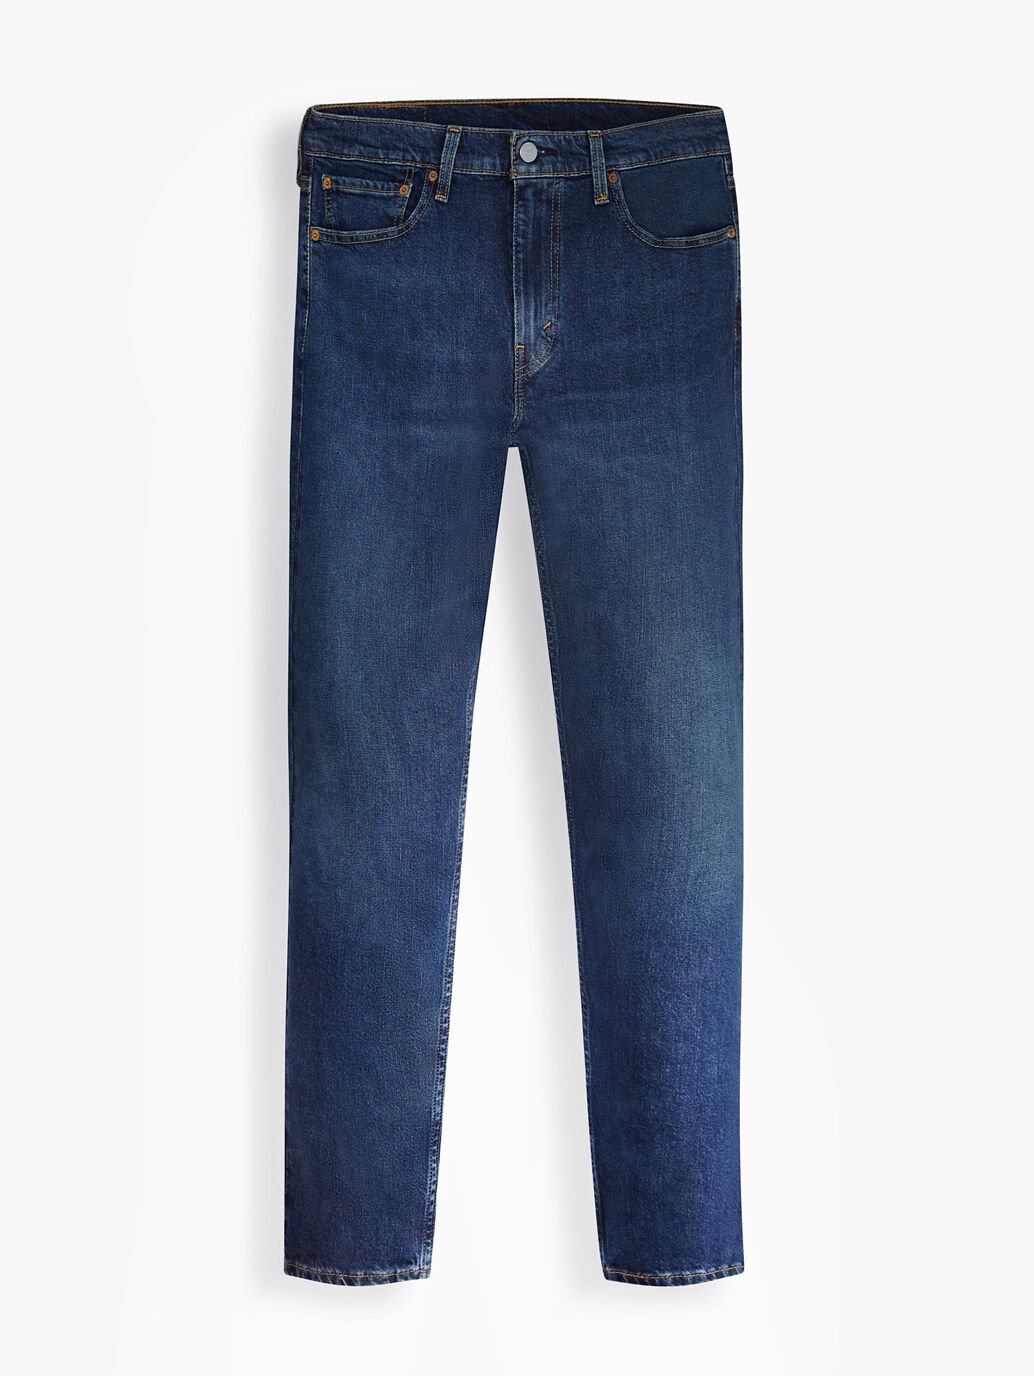 Men's Dark Blue Slim Taper Jeans - 512™ Denim Stretch